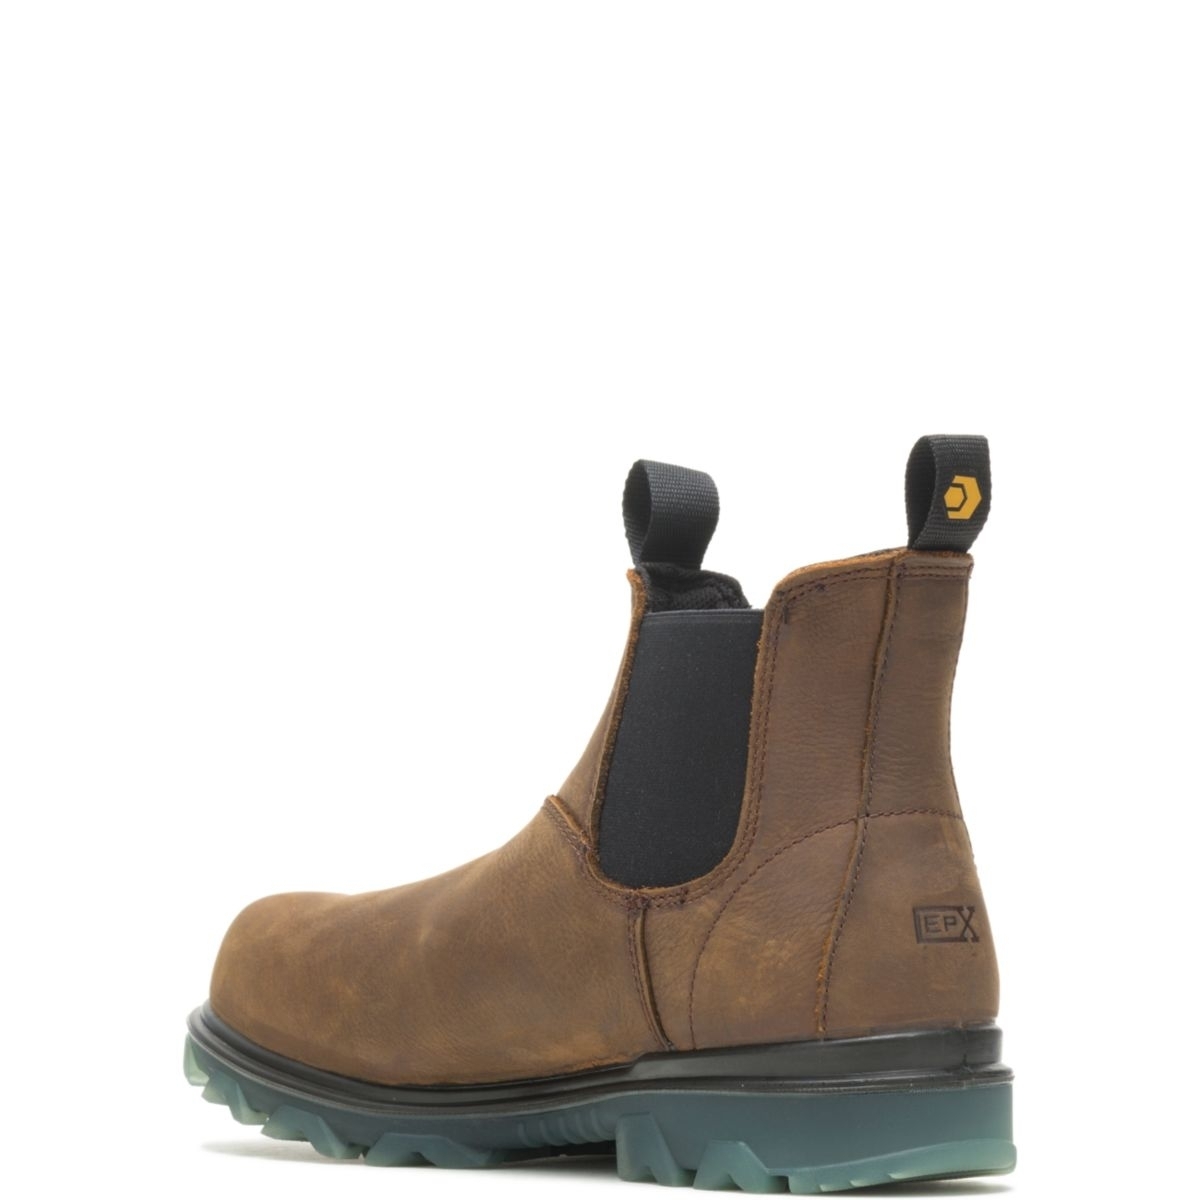 WOLVERINE Men's I-90 EPXÂ® Waterproof Soft Toe Romeo Pull On Work Boot Brown - W10790 - SUDAN BROWN, 11 X-Wide